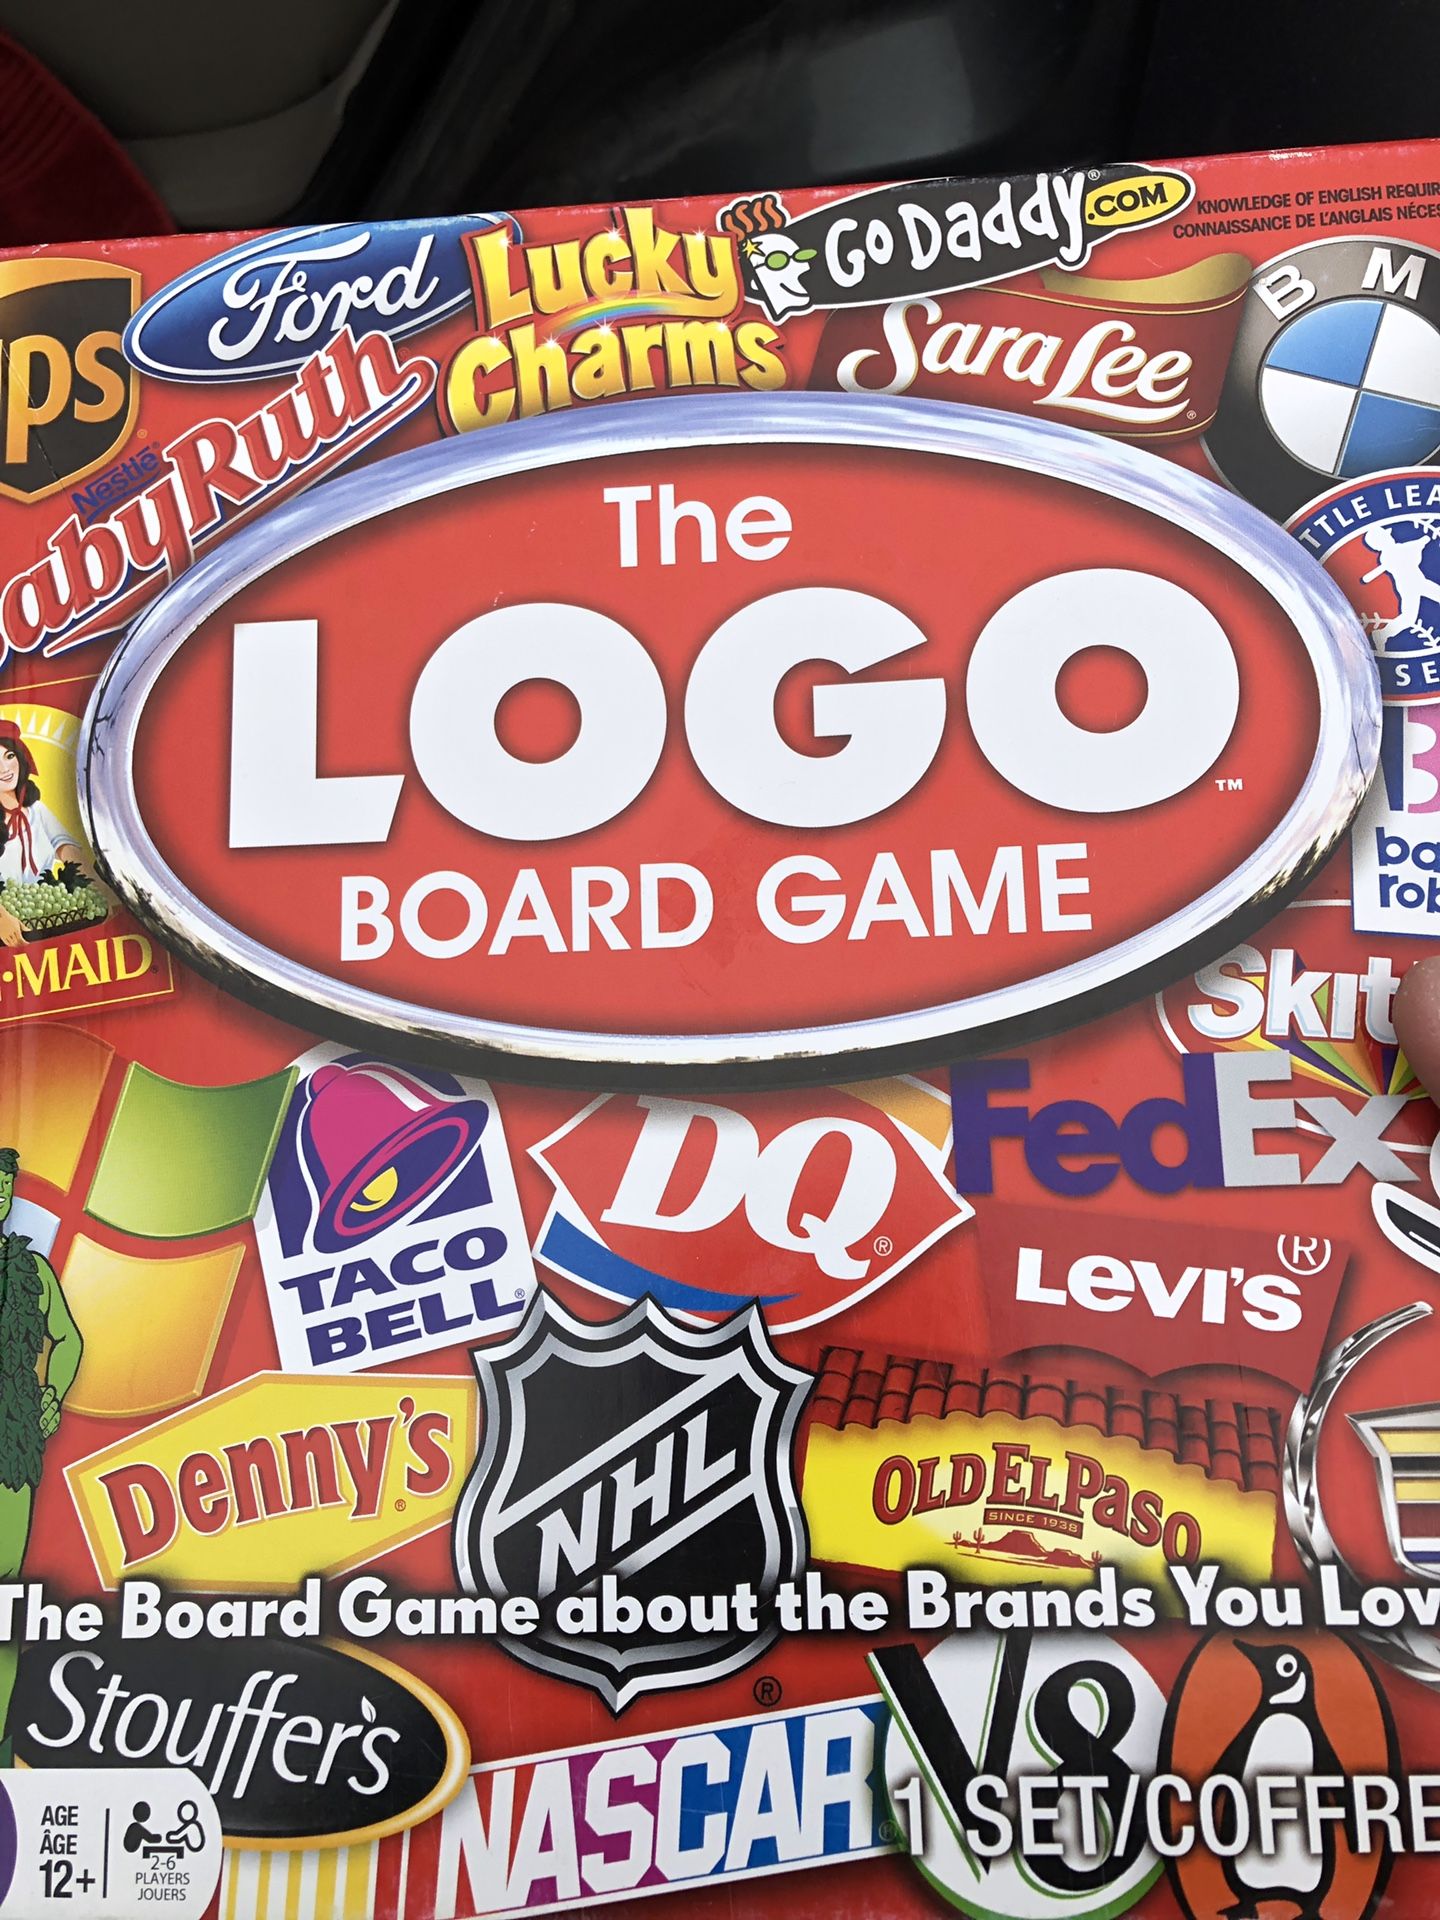 The logo board game